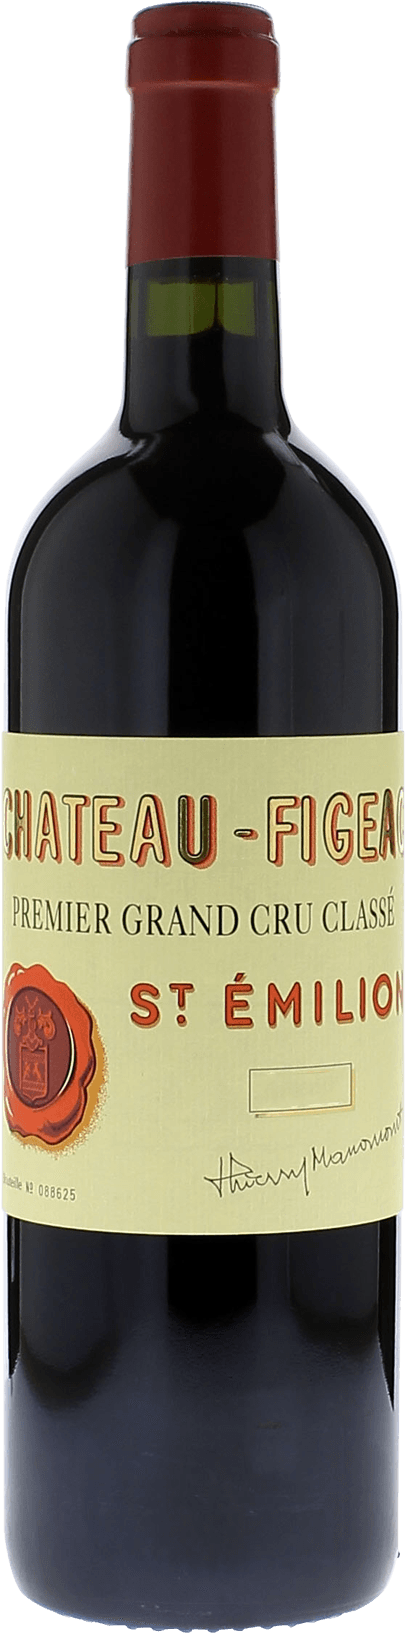 Figeac 1988 1er Grand cru B class Saint-Emilion, Bordeaux rouge